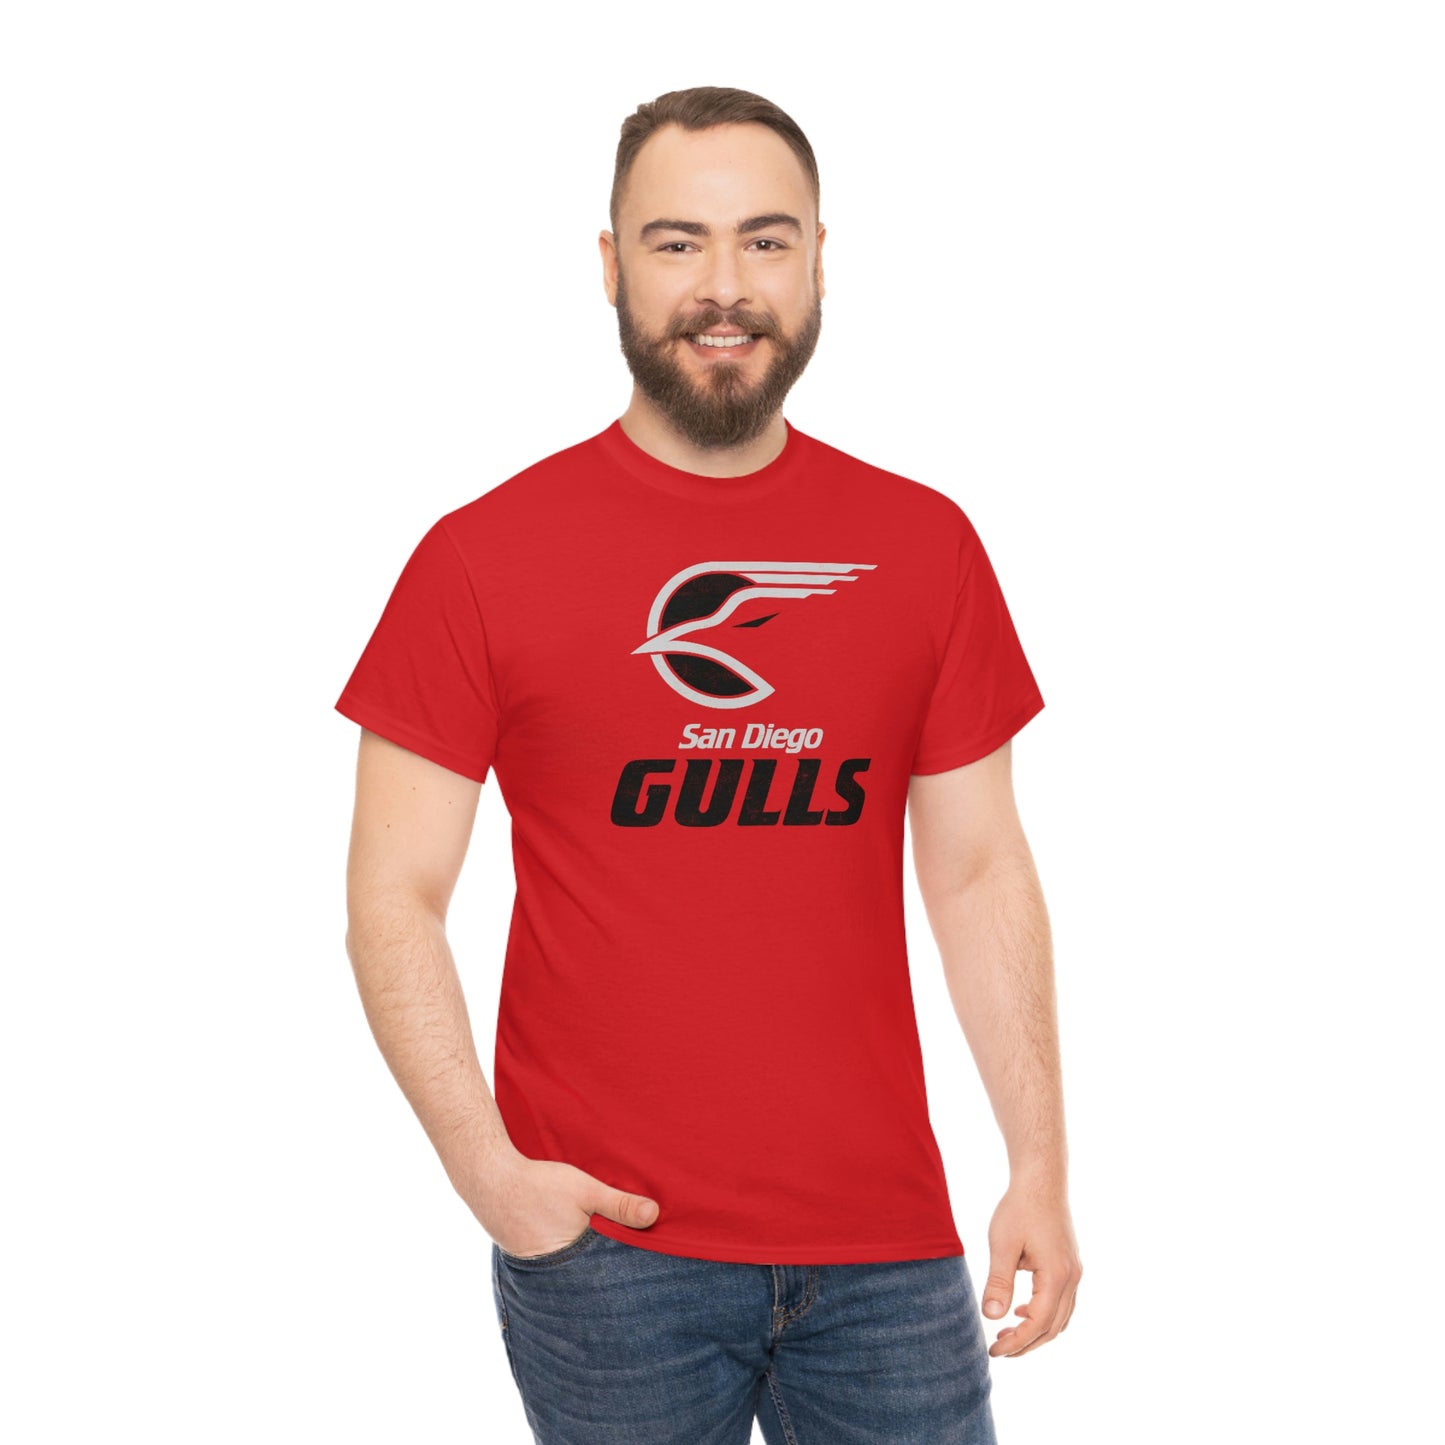 San Diego Gulls T-Shirt